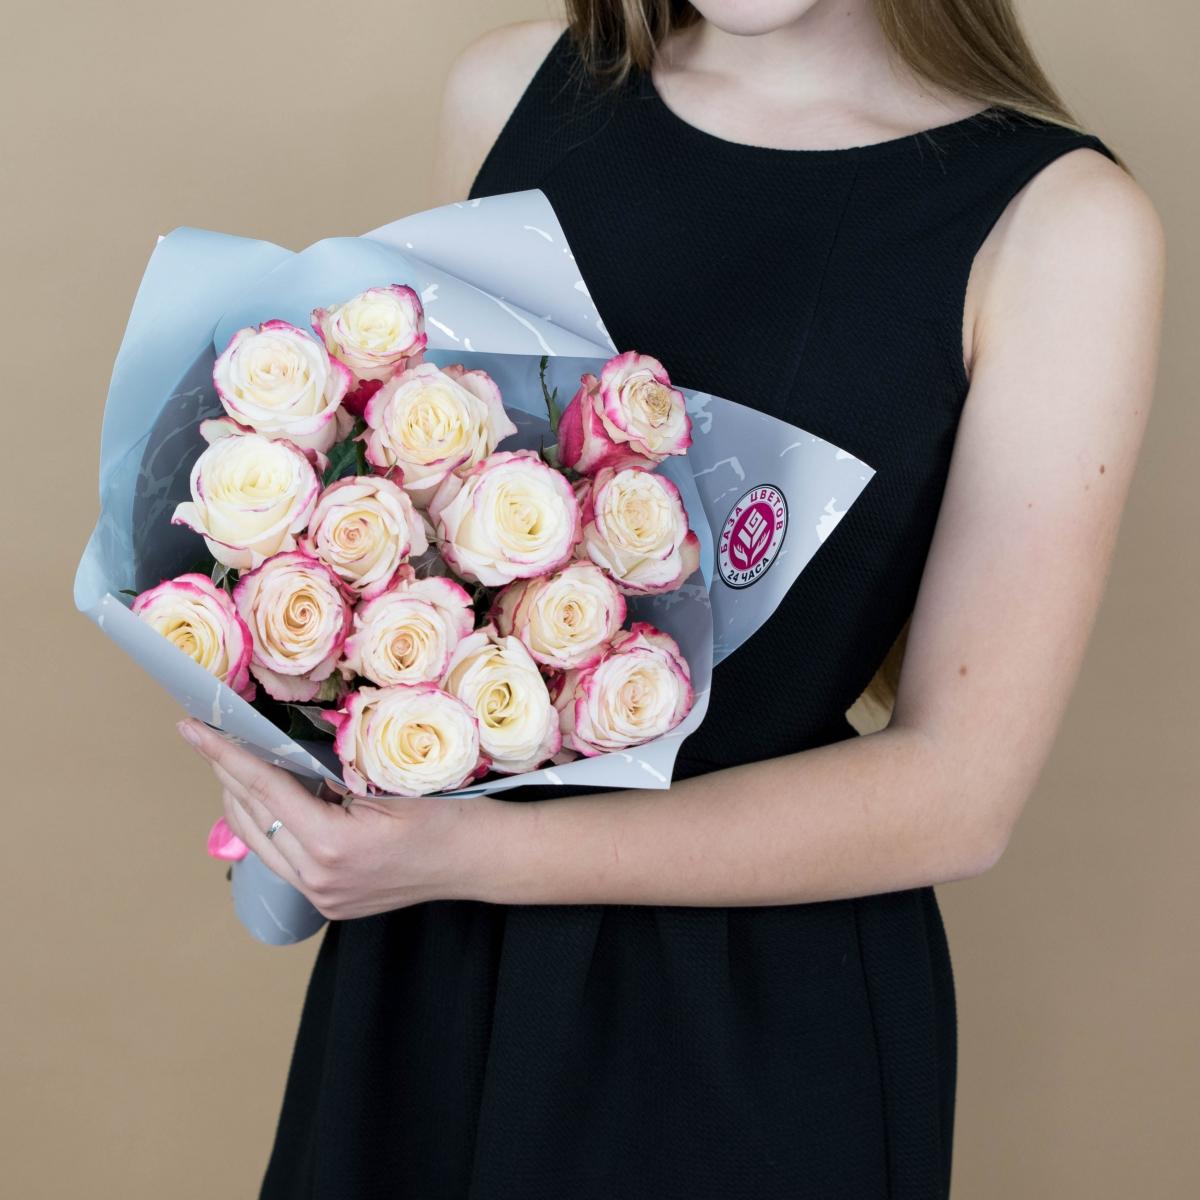 Розы красно-белые (40 см) Эквадор артикул букета  513ulan